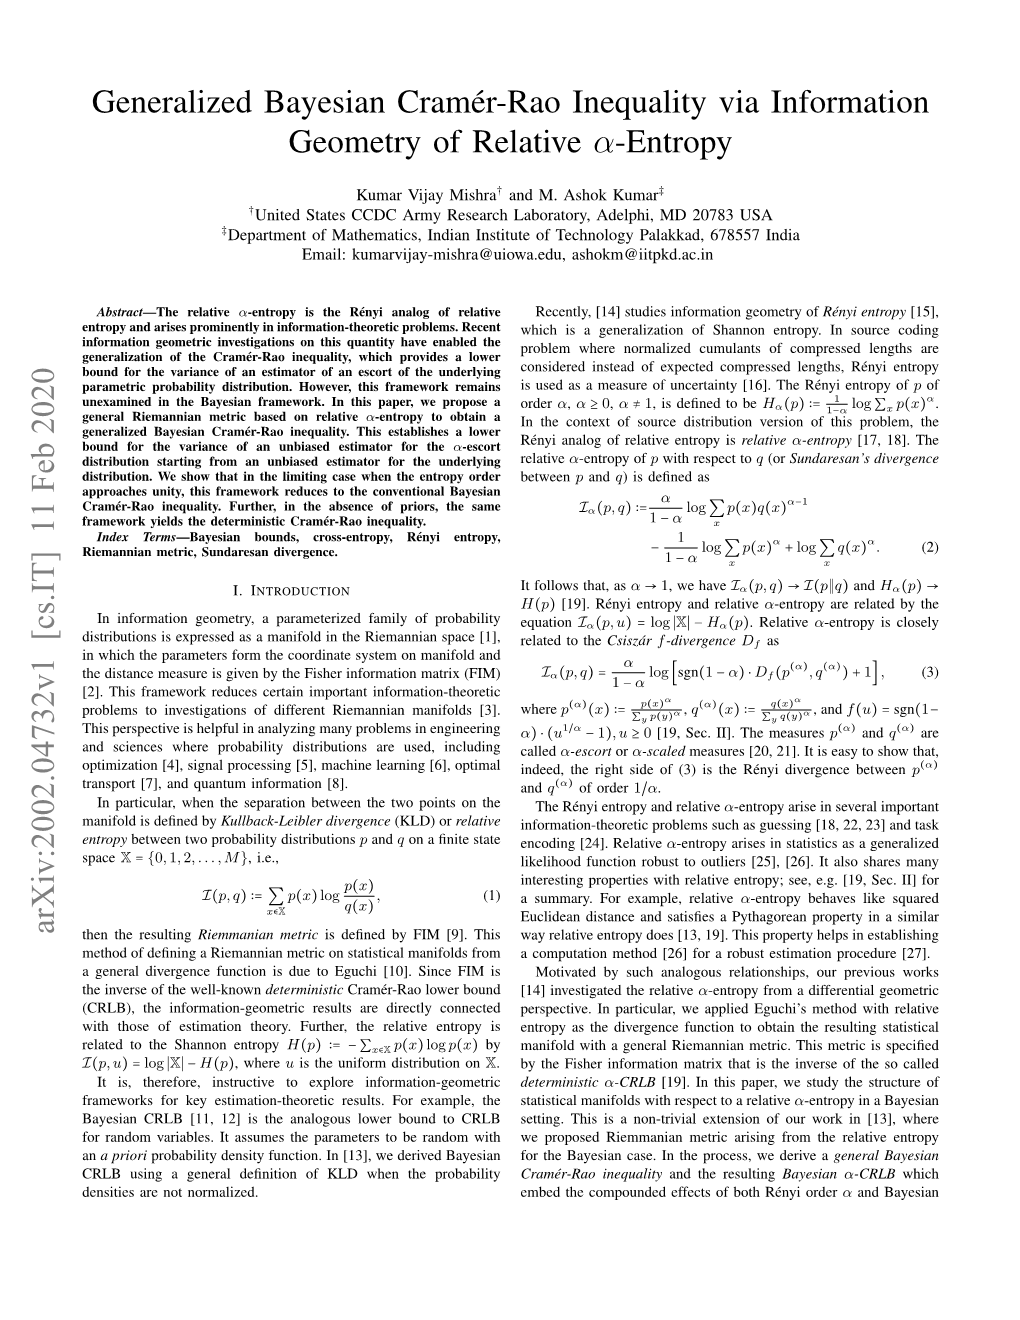 Generalized Bayesian Cramér-Rao Inequality Via Information Geometry of Relative Α-Entropy